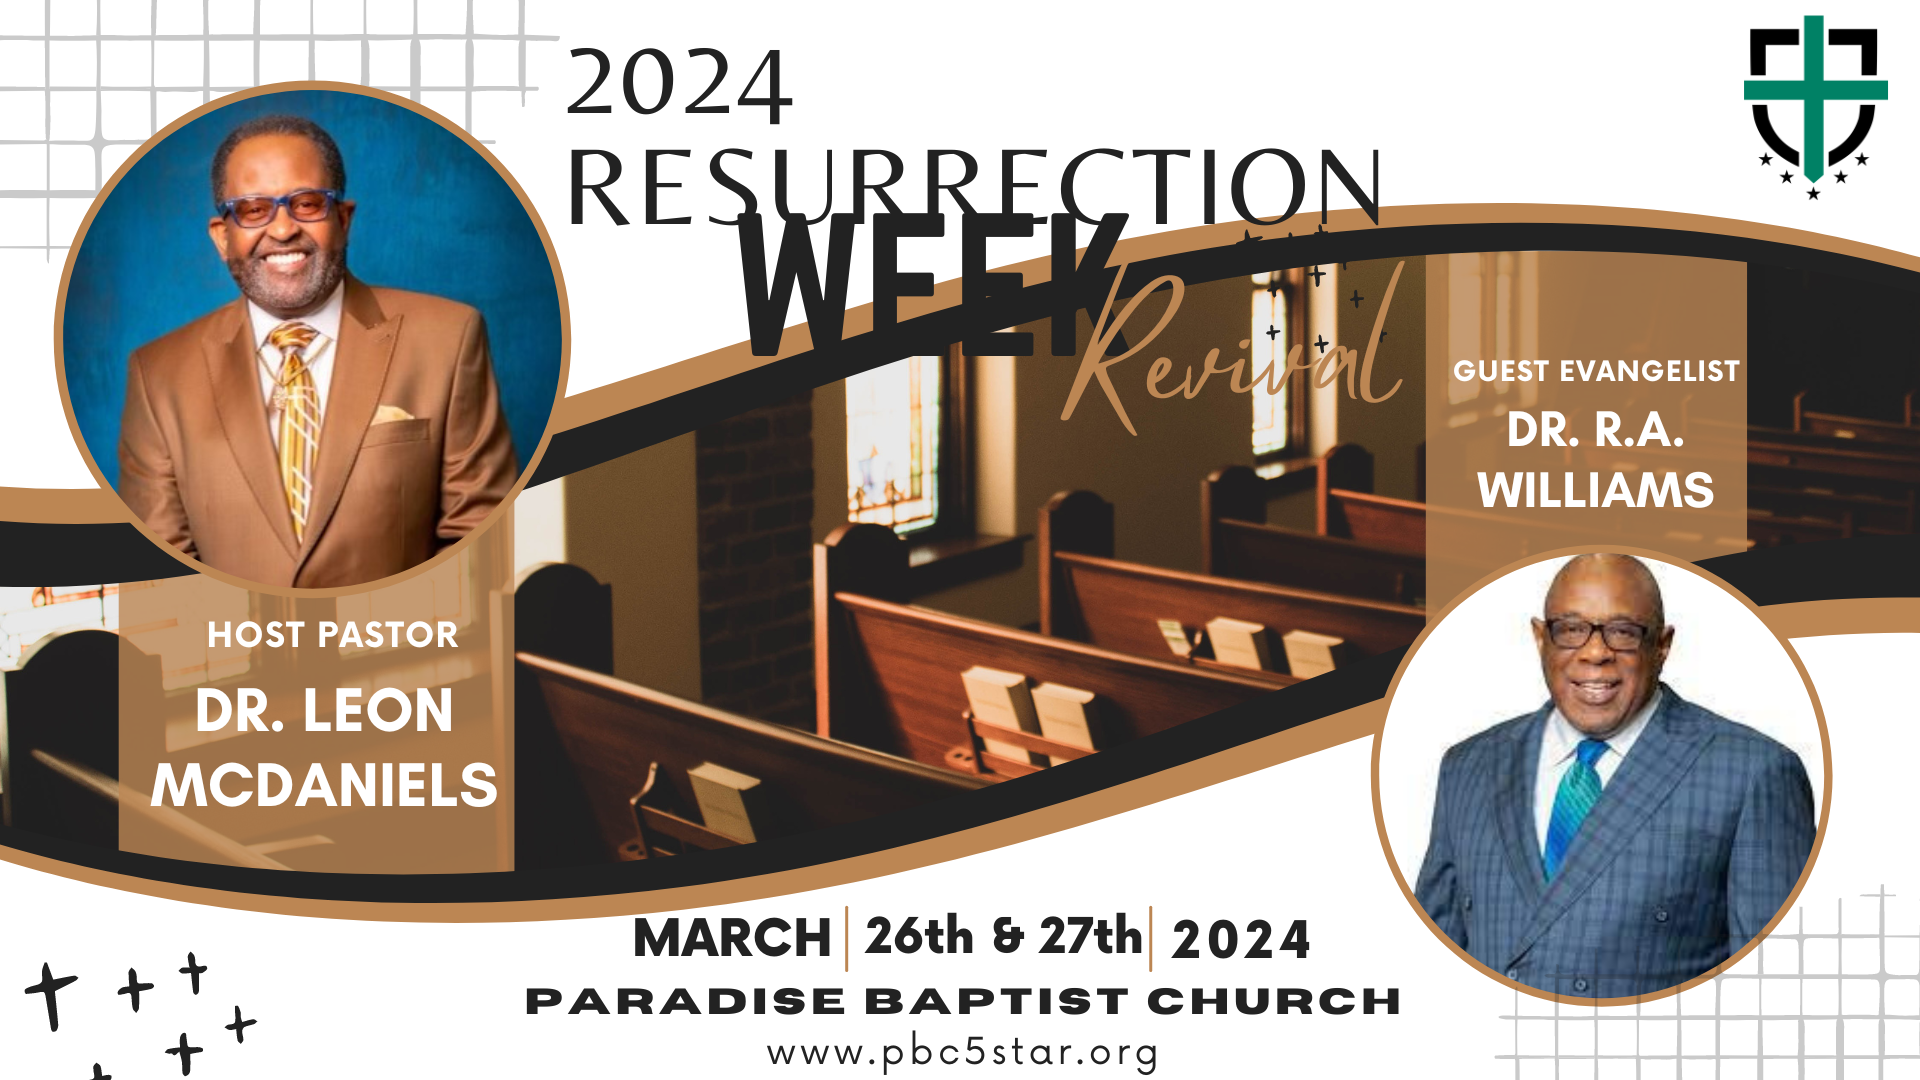 Copy of 2024 Resurrection Week Revival Flyer.png